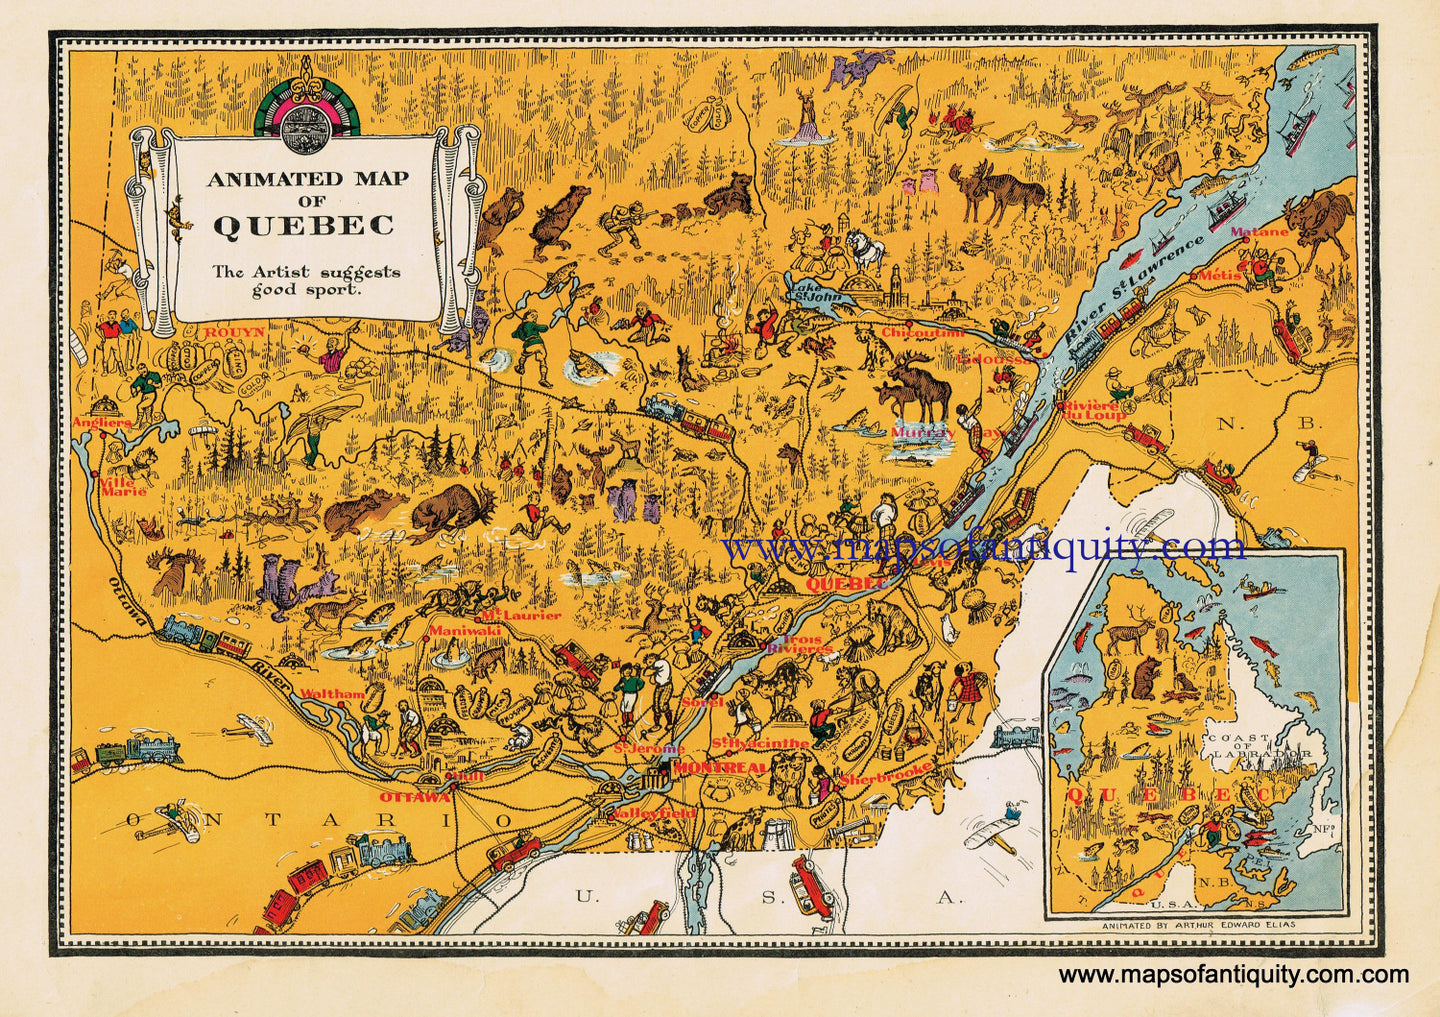 Reproduction-Antique-Pictorial-Map-Quebec-Canada-Arthur-Elias-1940s-Maps-of-Antiquity